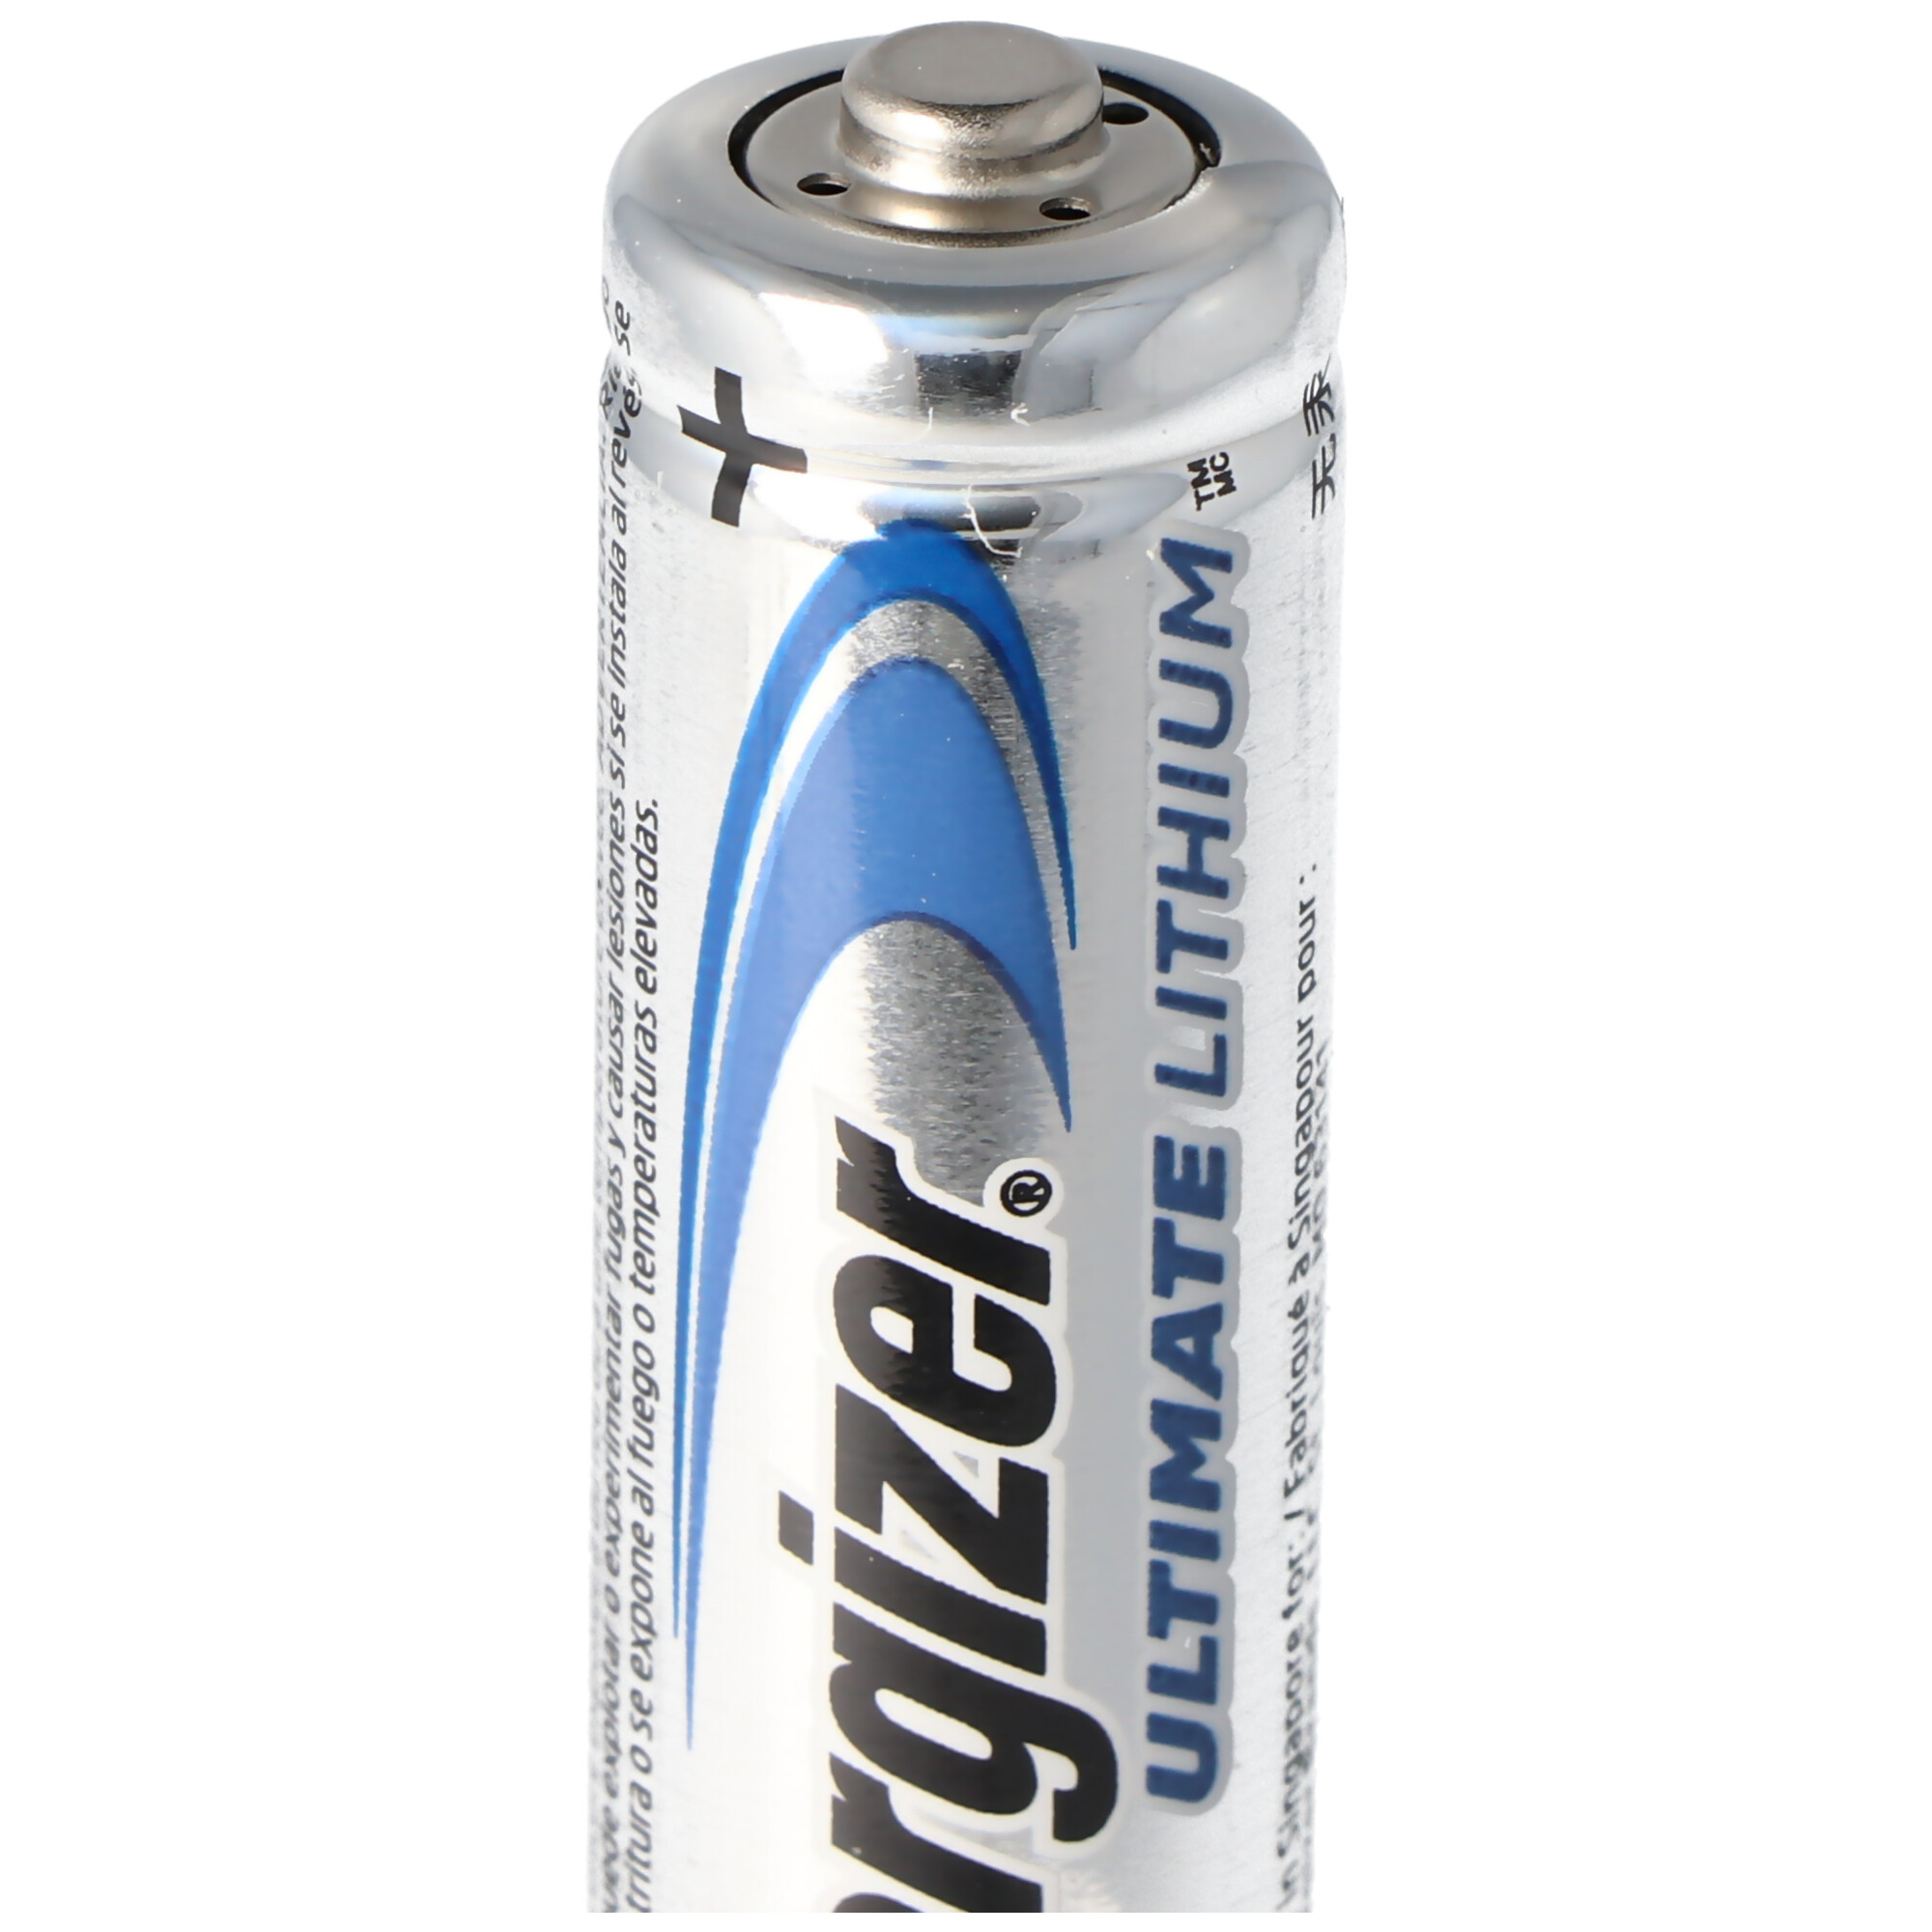 Energizer L91 Lithium Batterie AA 1,5 Volt, 3000mAh 2er Blister